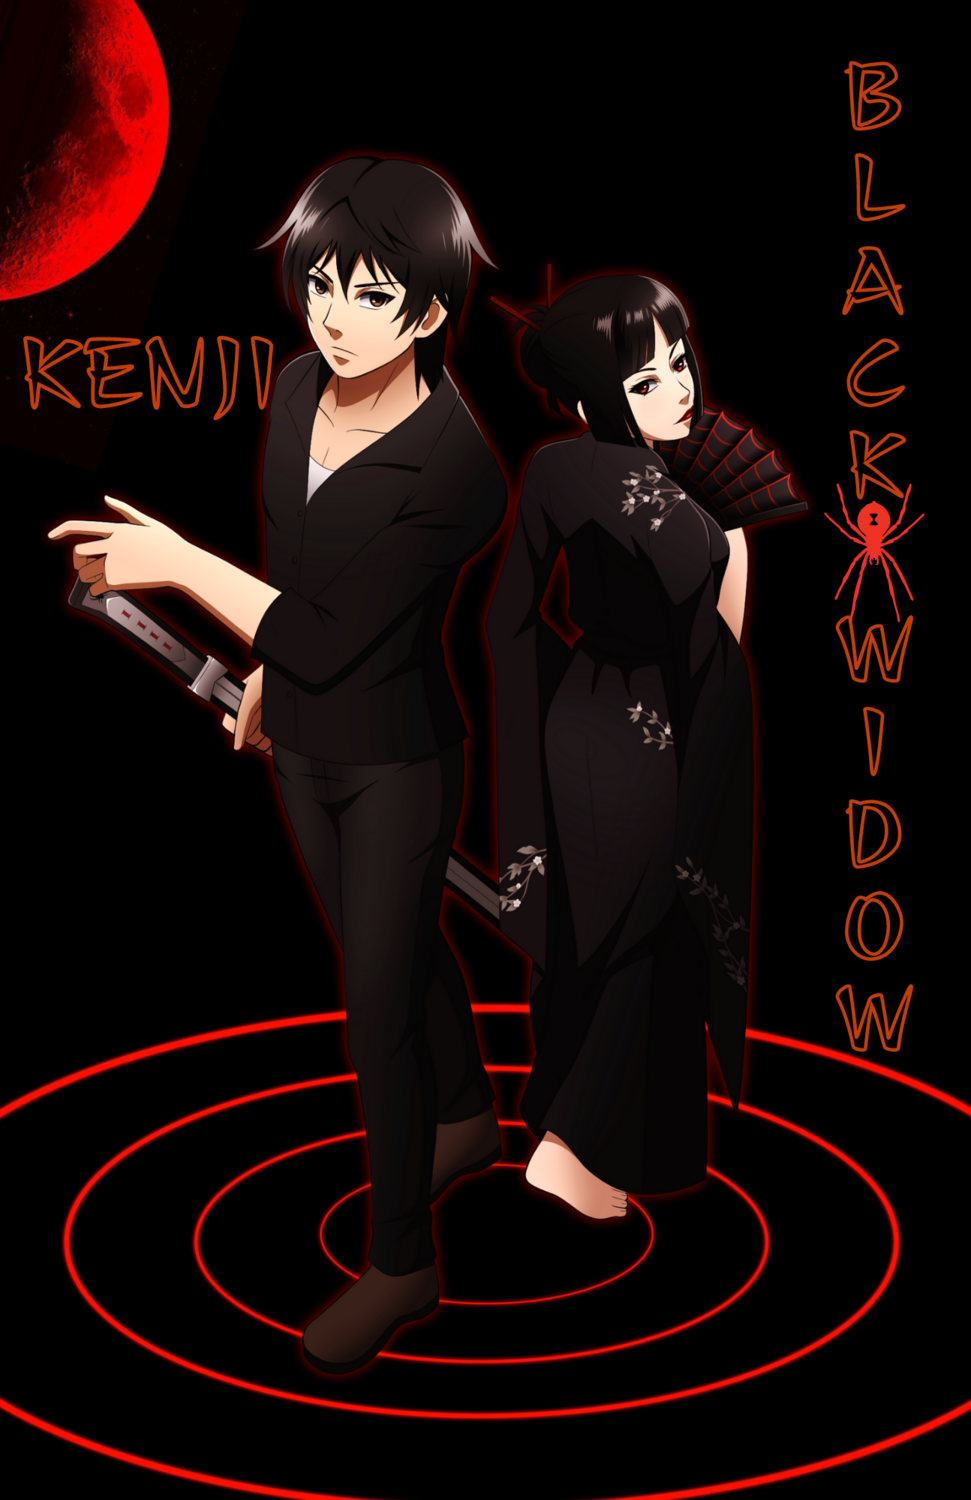 Kenji and Black Widow